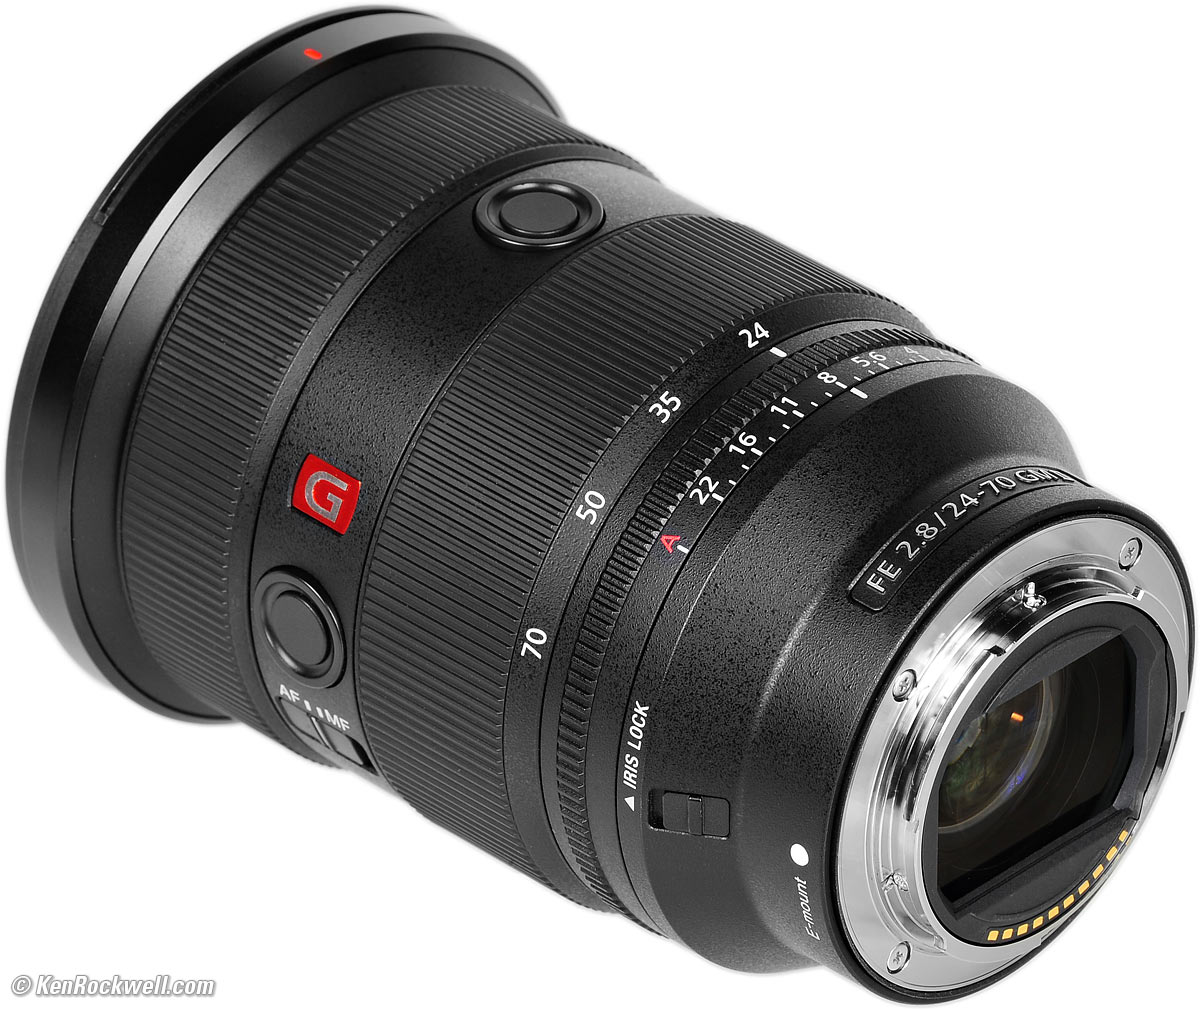 Sony FE 24-70mm F2.8 GM II Lens Review